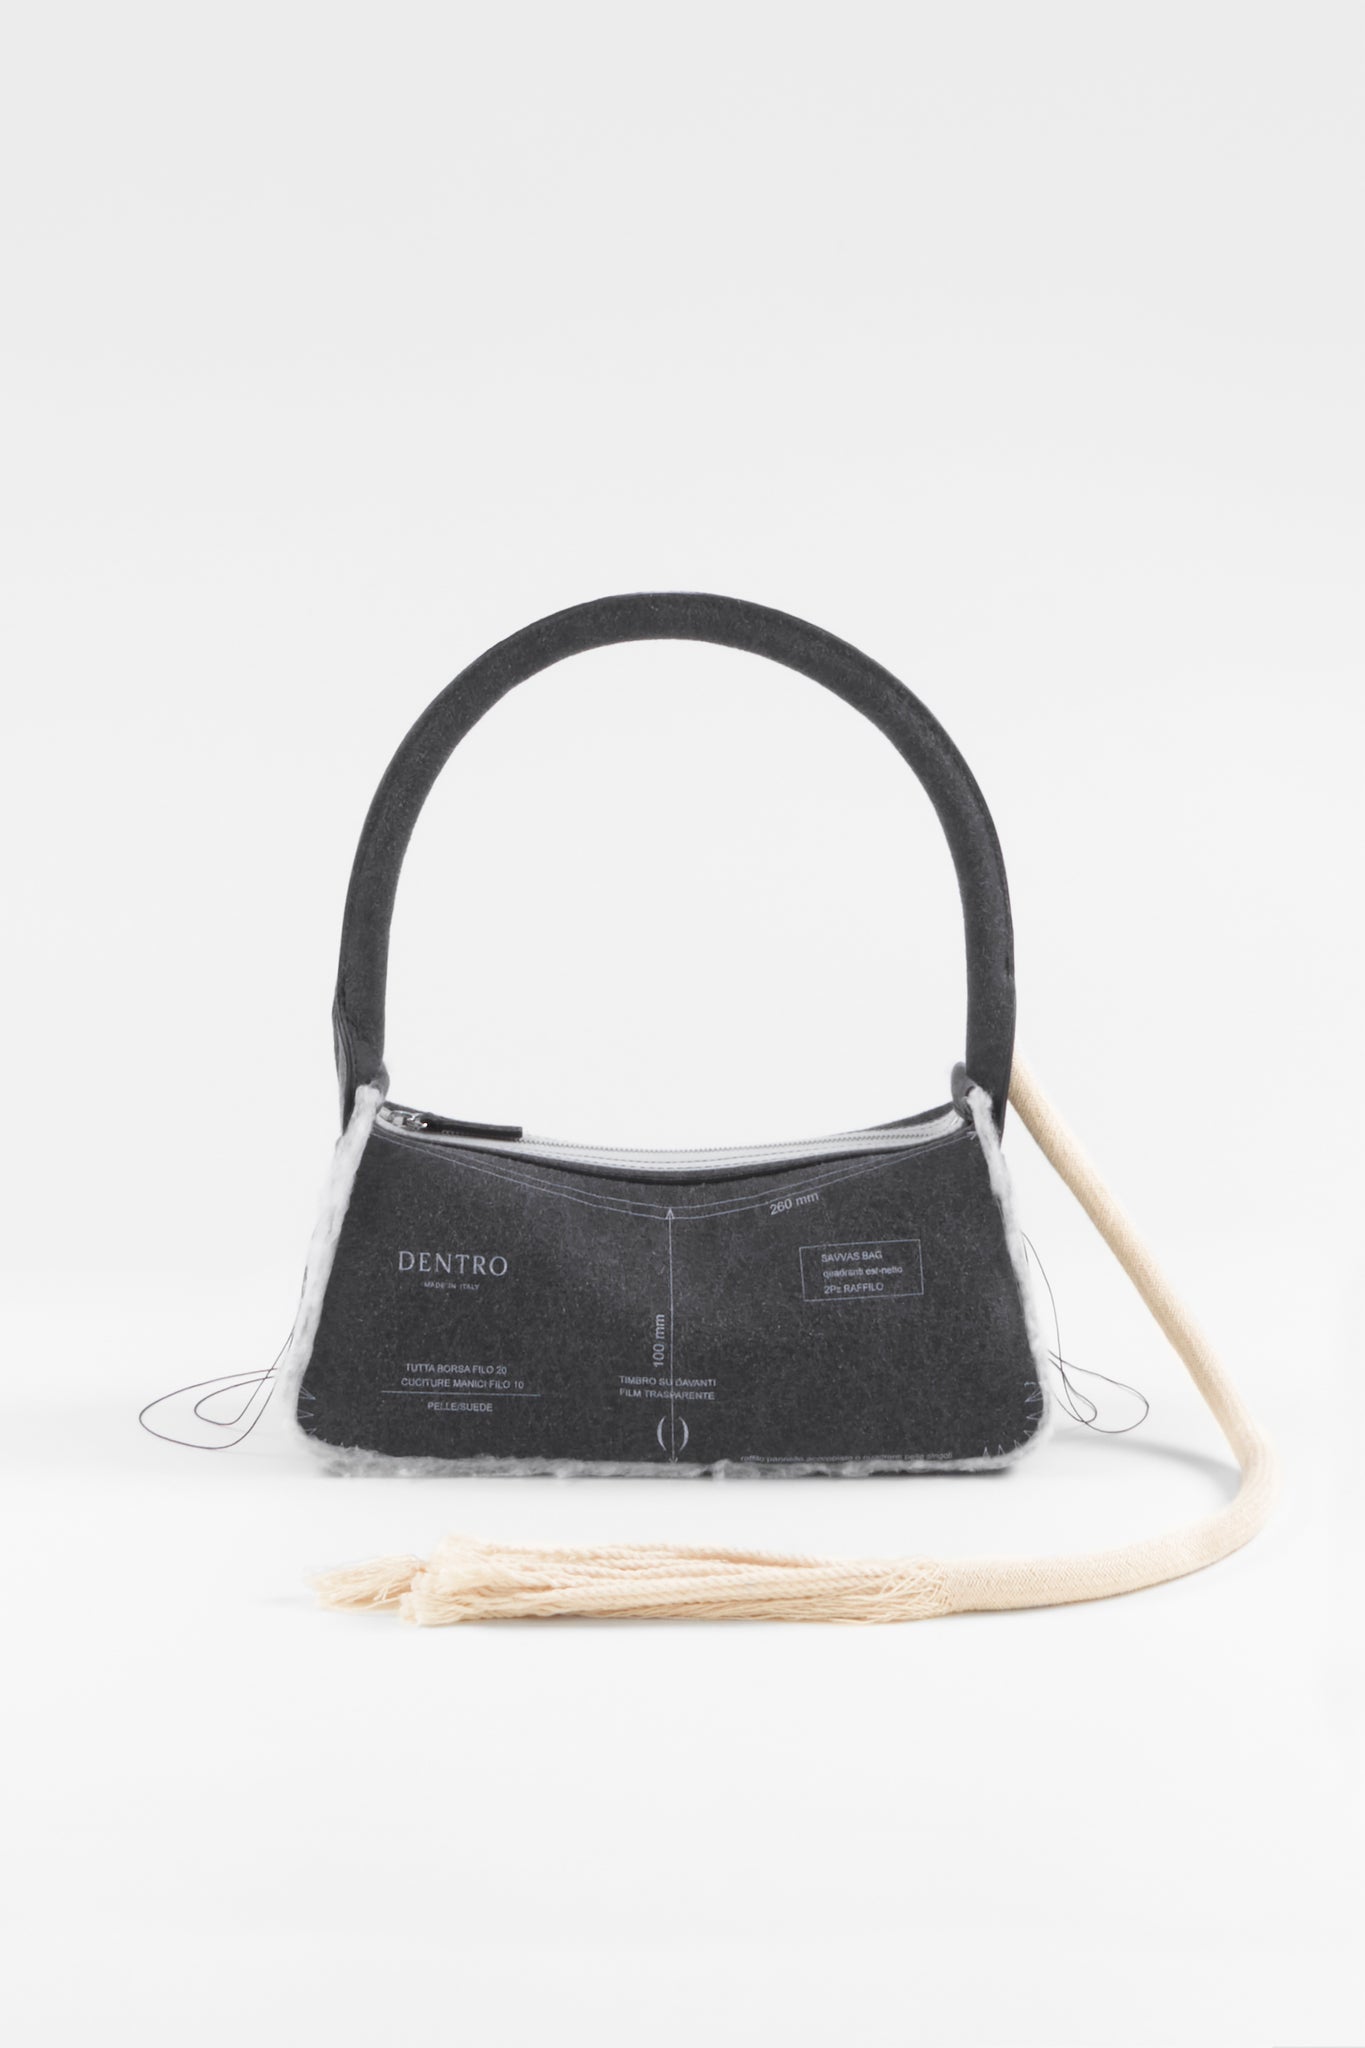 Buy BOSTANTEN Women's Leather Designer Handbags Purses Tote Shoulder  Vintage Bags Black at Amazon.in